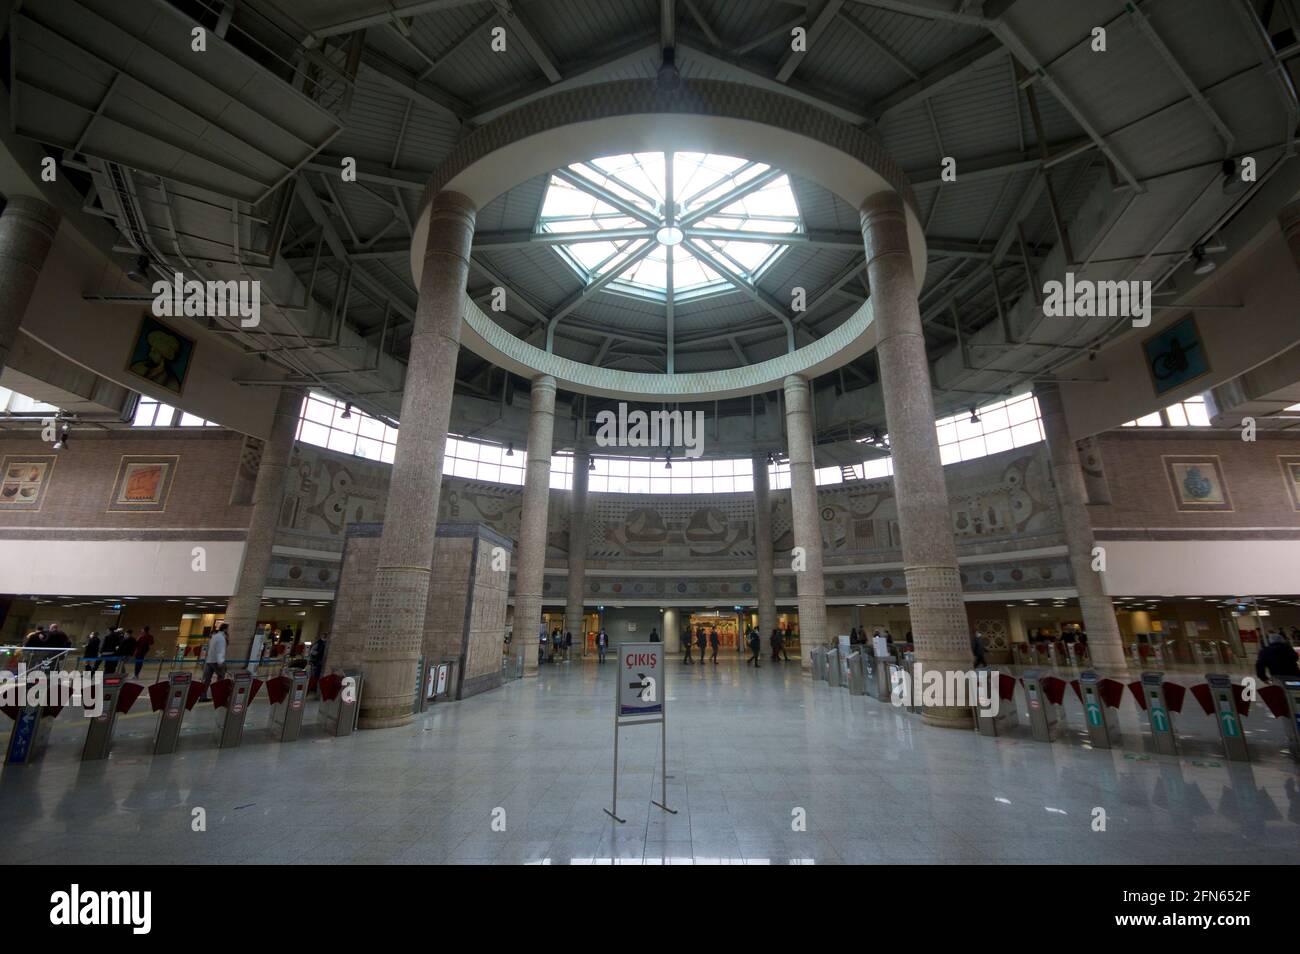 Atrium at Yenikapi railway station, Istanbul Stock Photo